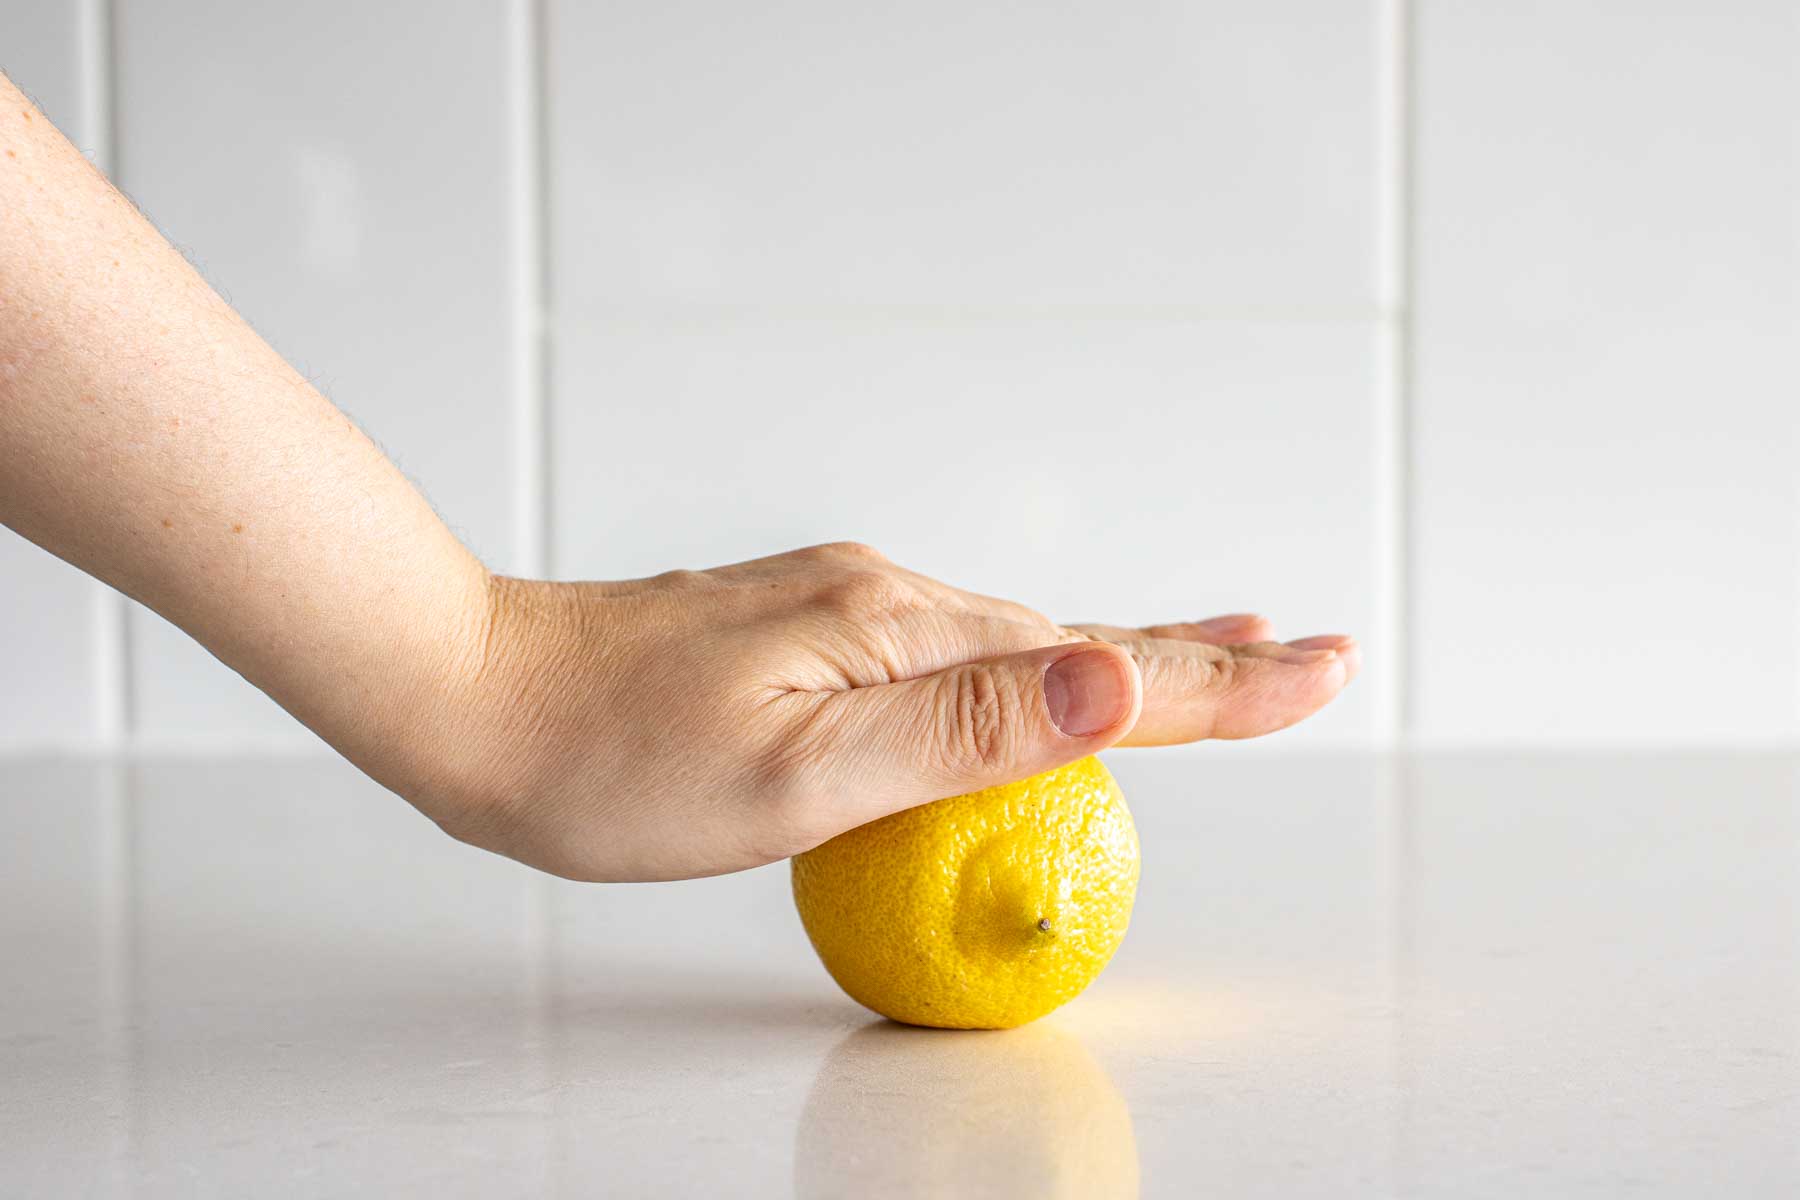 Hand rolling a lemon.